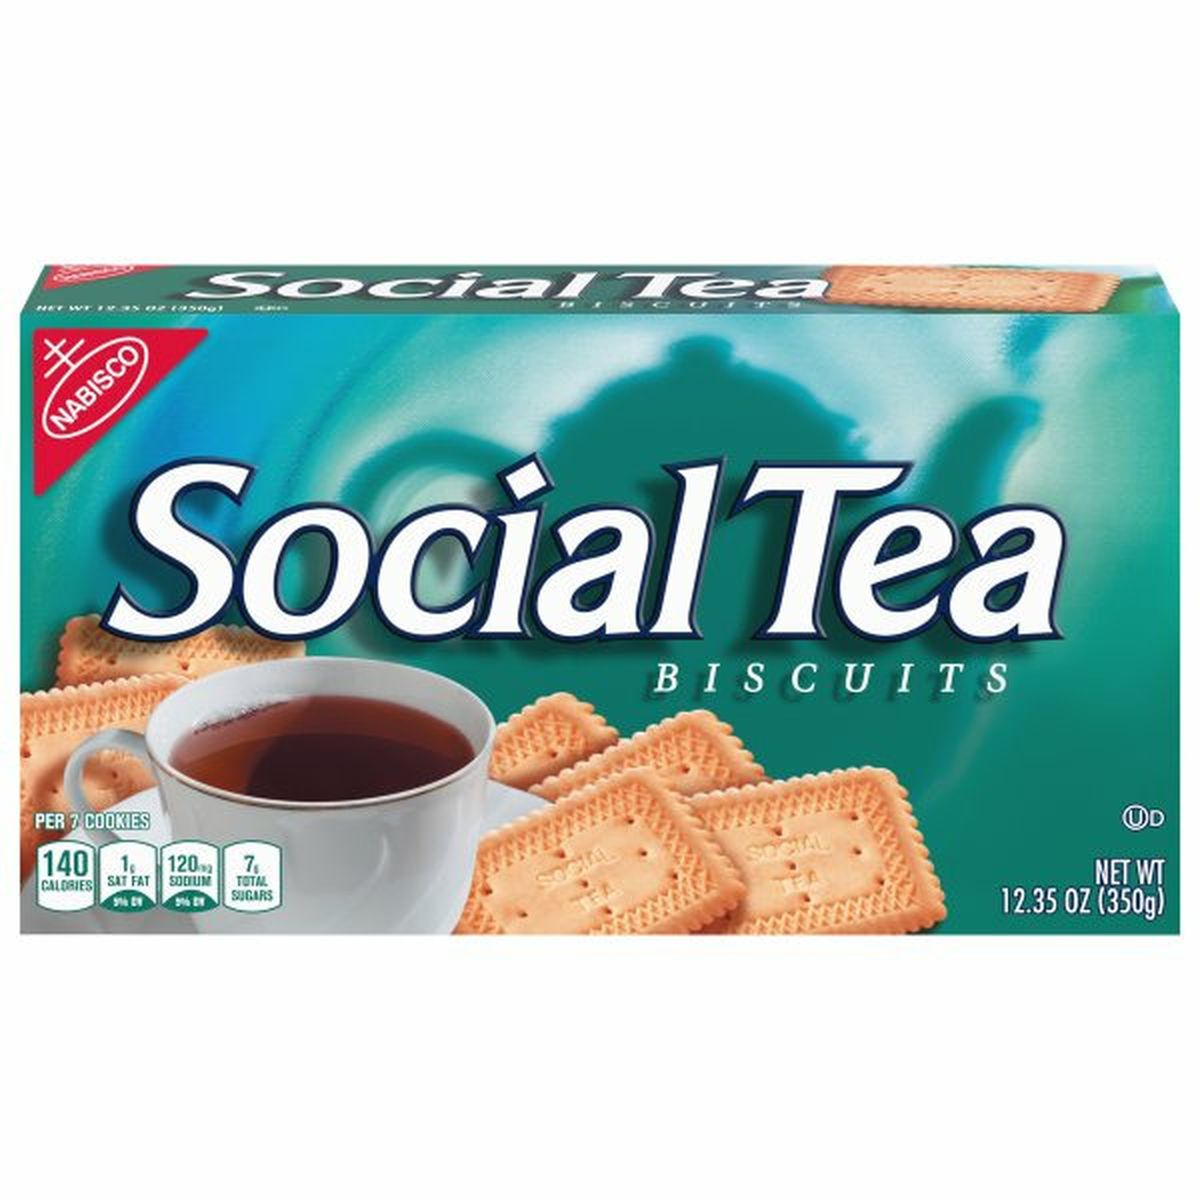 Calories in Social Tea Biscuits